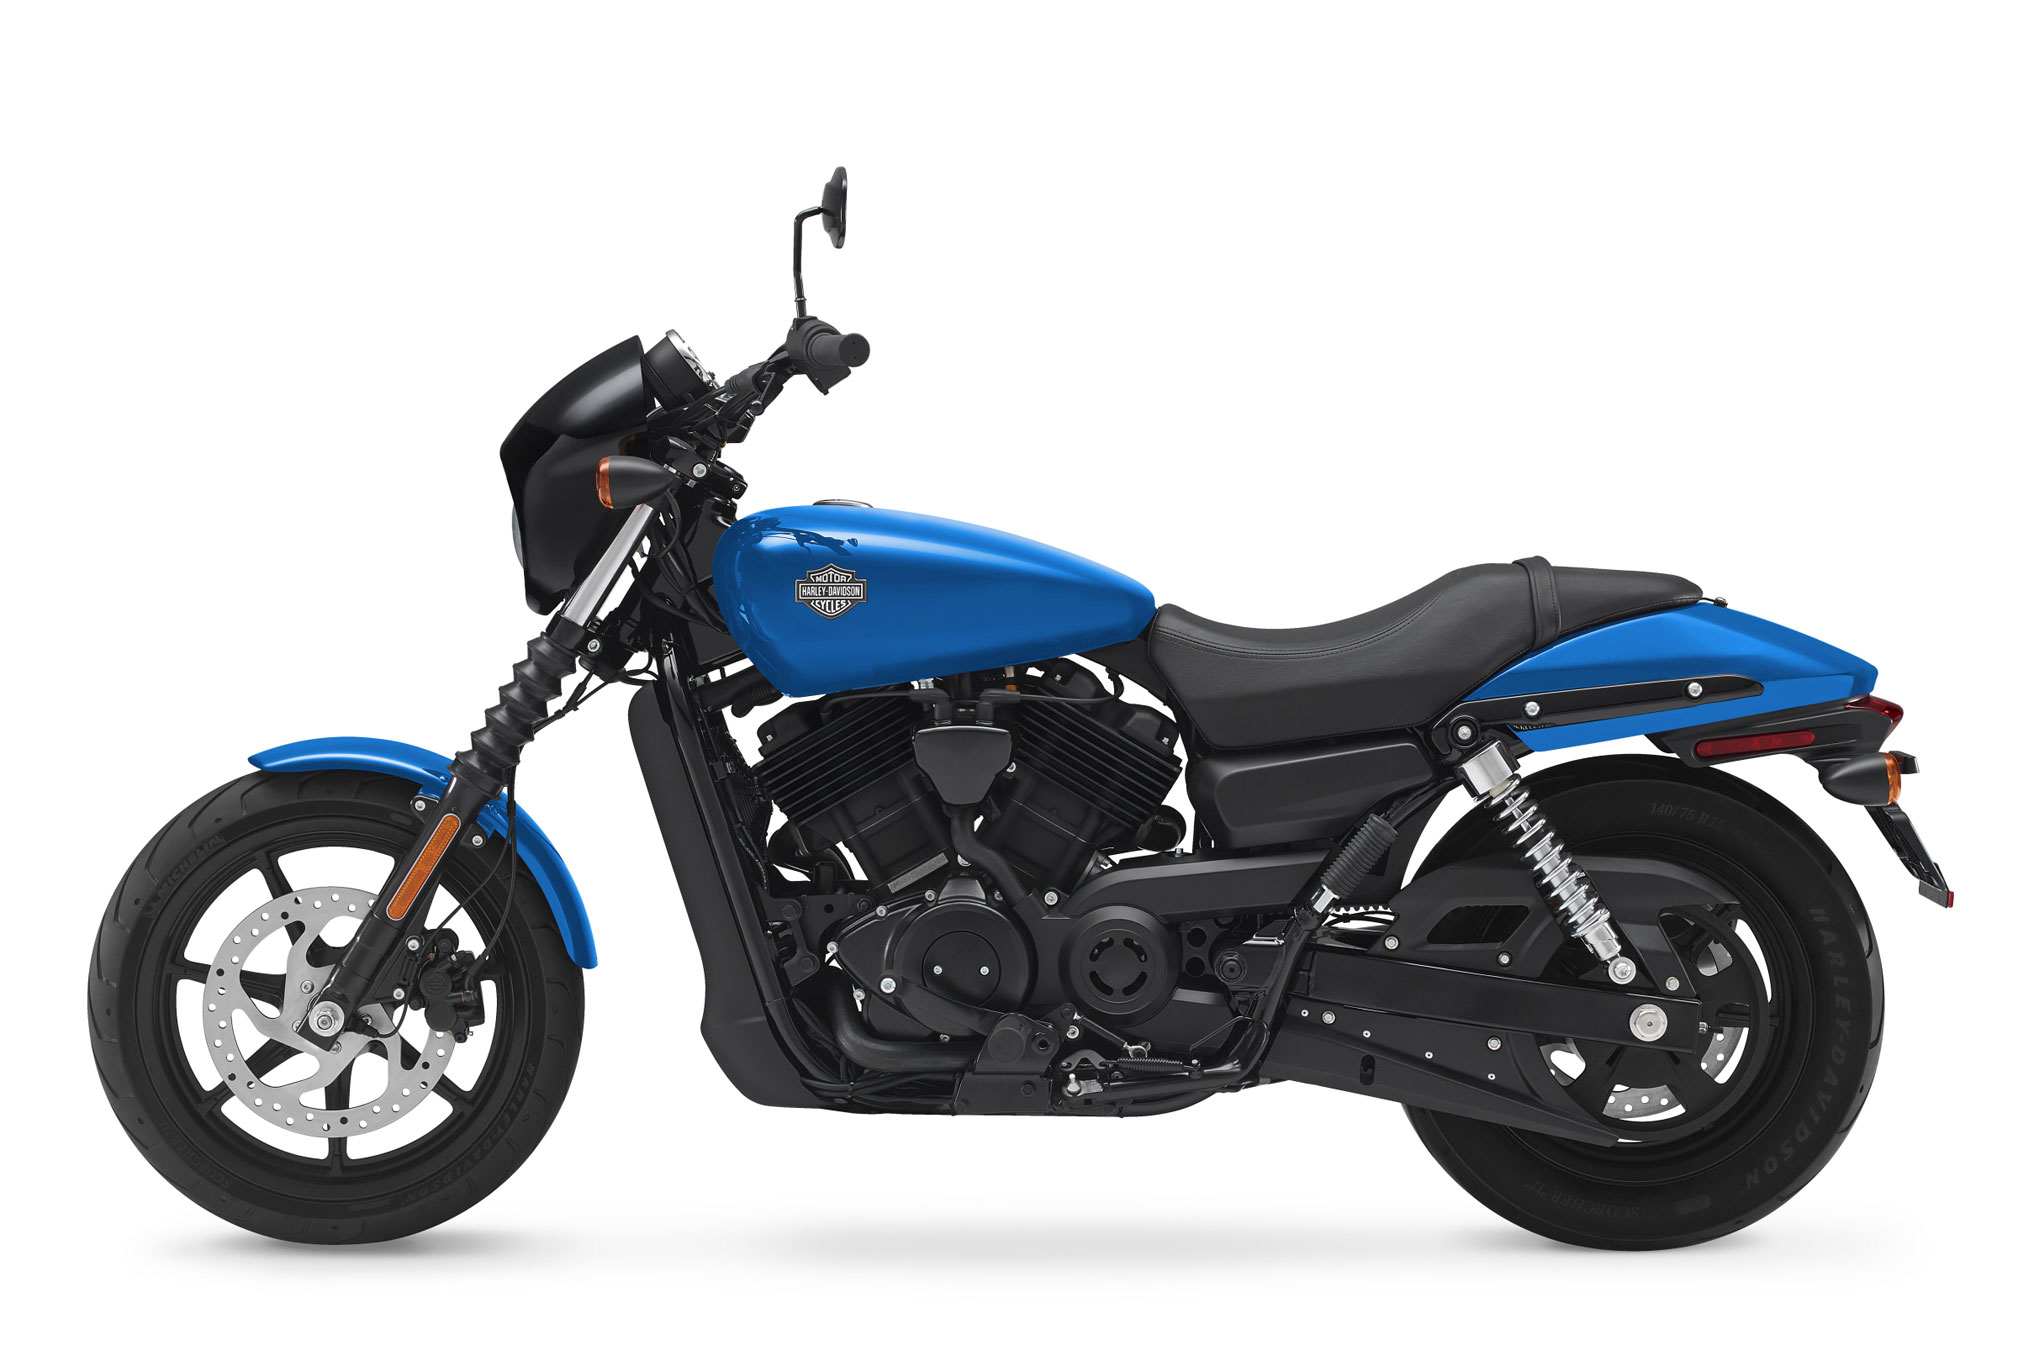  2019  Harley  Davidson  Street  500  Review  Total Motorcycle